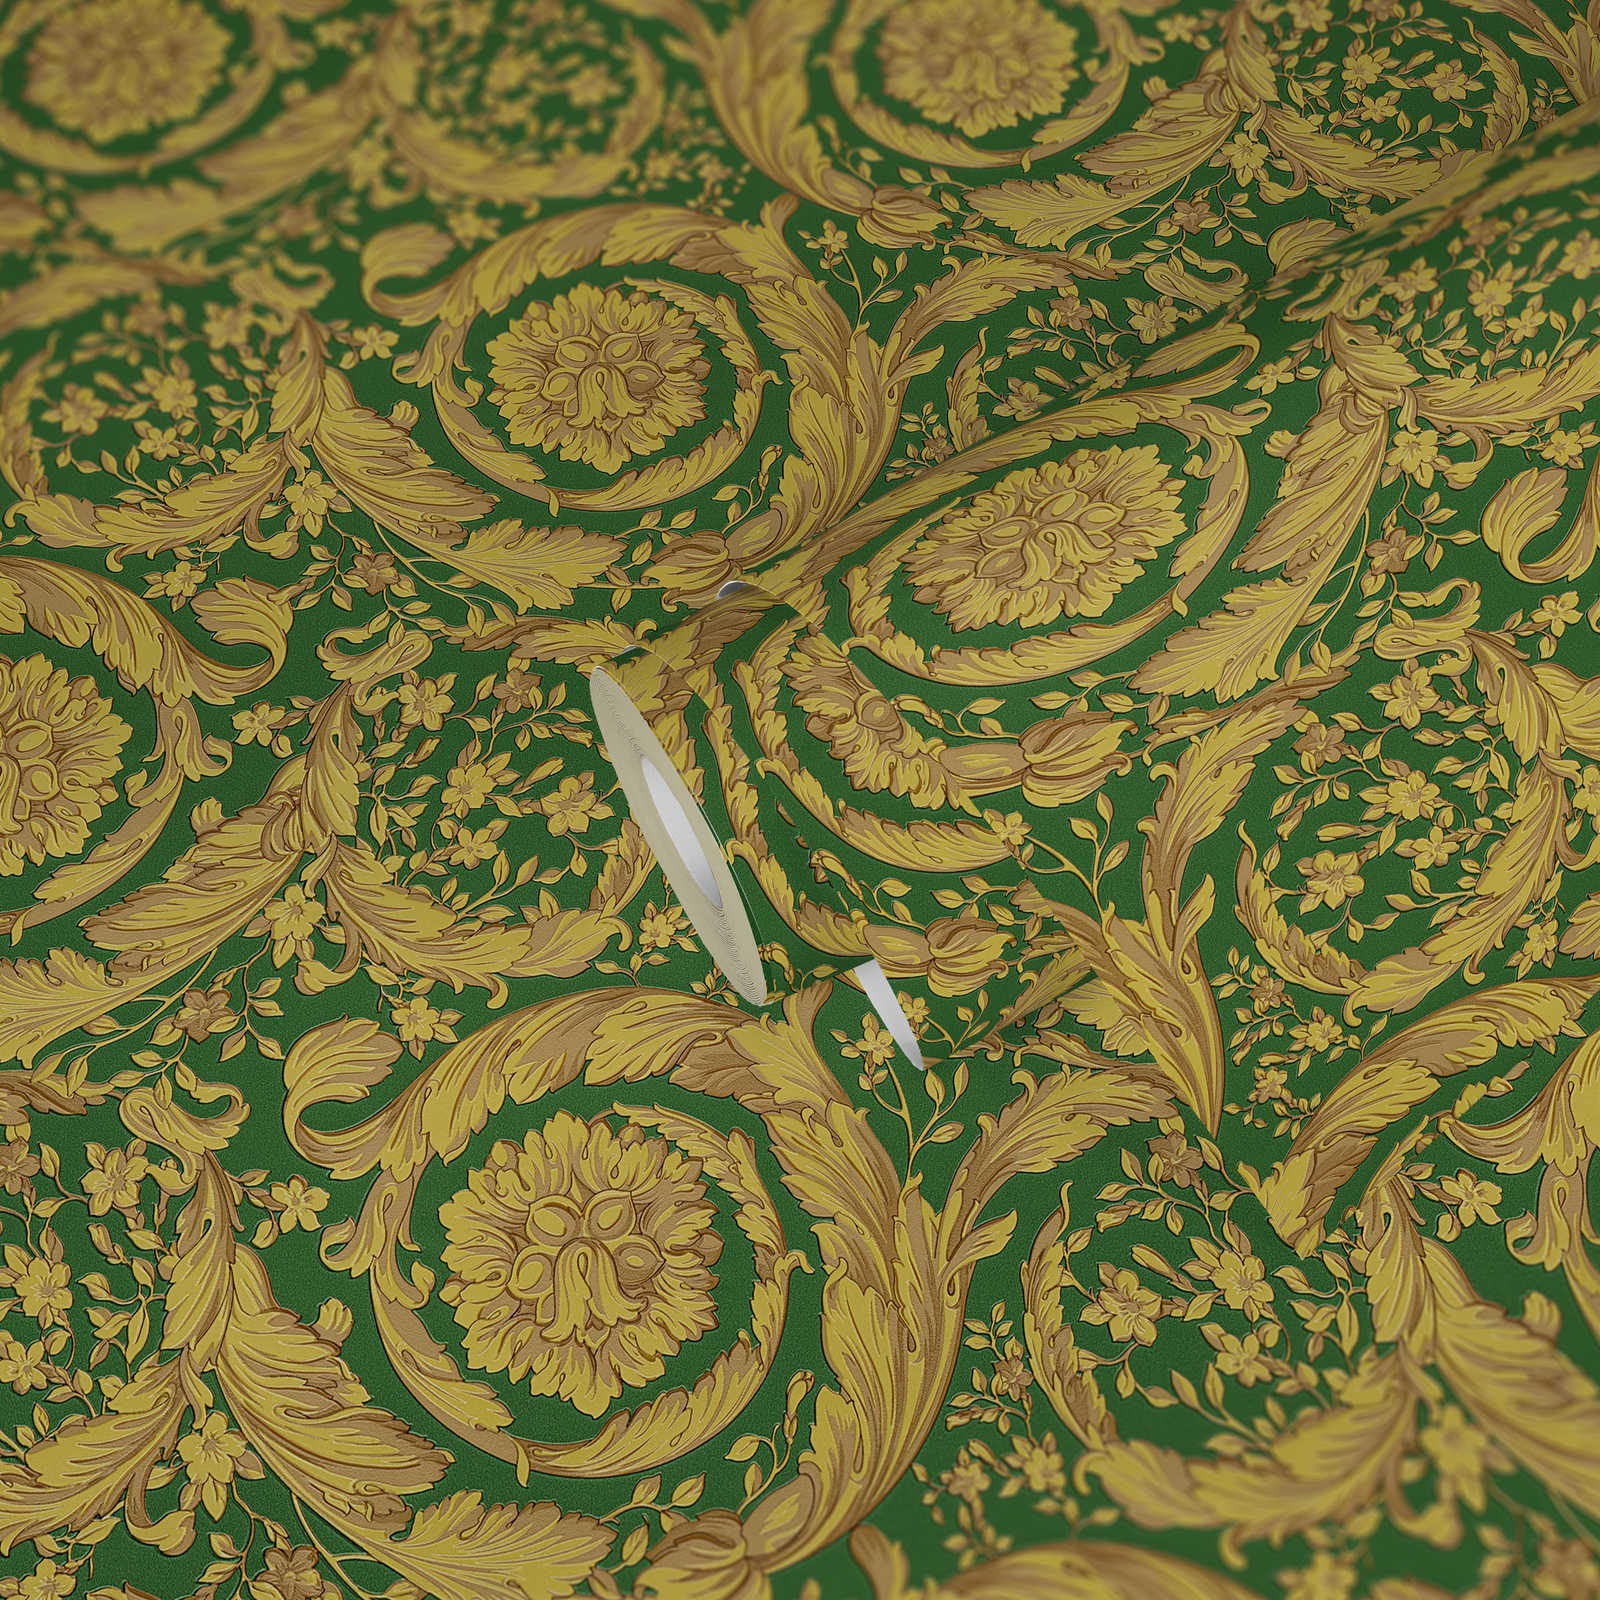             VERSACE wallpaper ornamental floral pattern - green, metallic, yellow
        